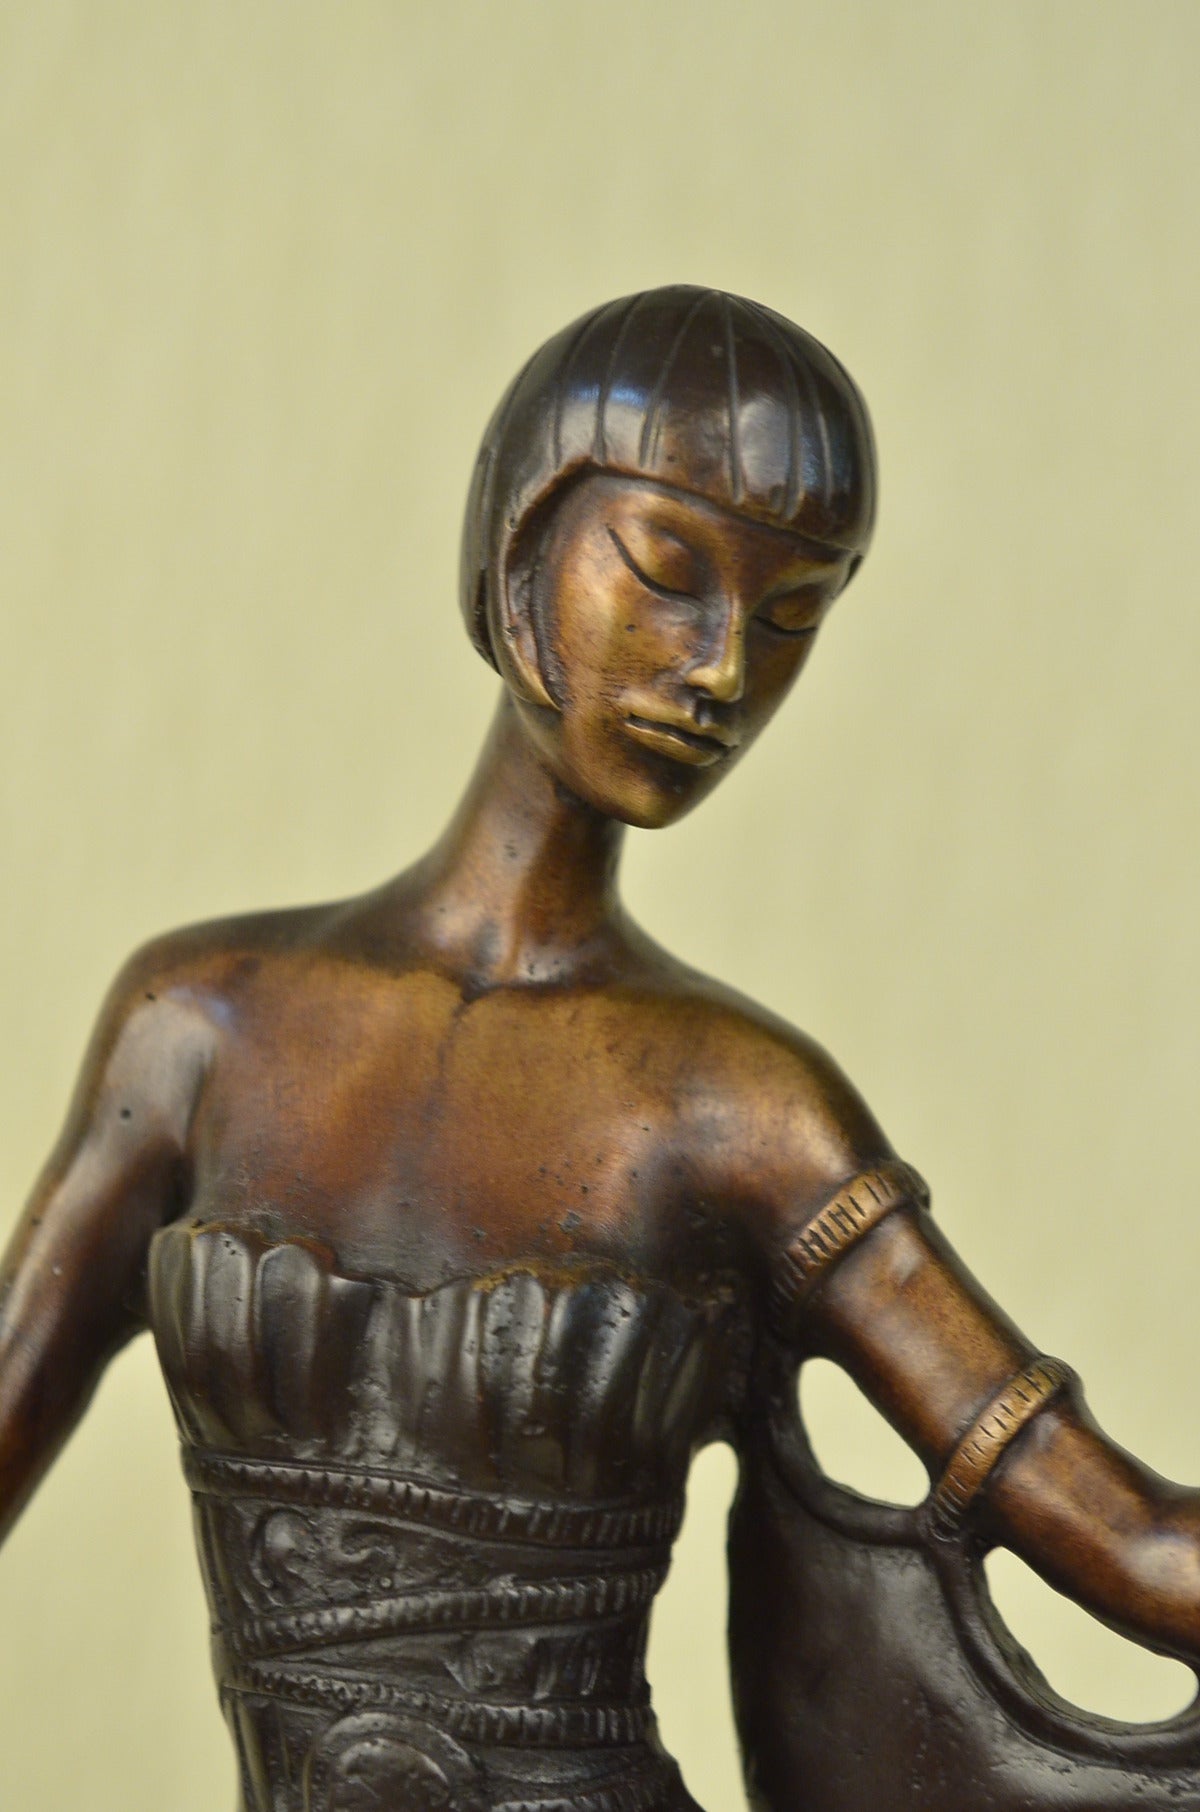 Handcrafted bronze sculpture SALE Dancer Nude Deco Art Base Marble On Cast Hot